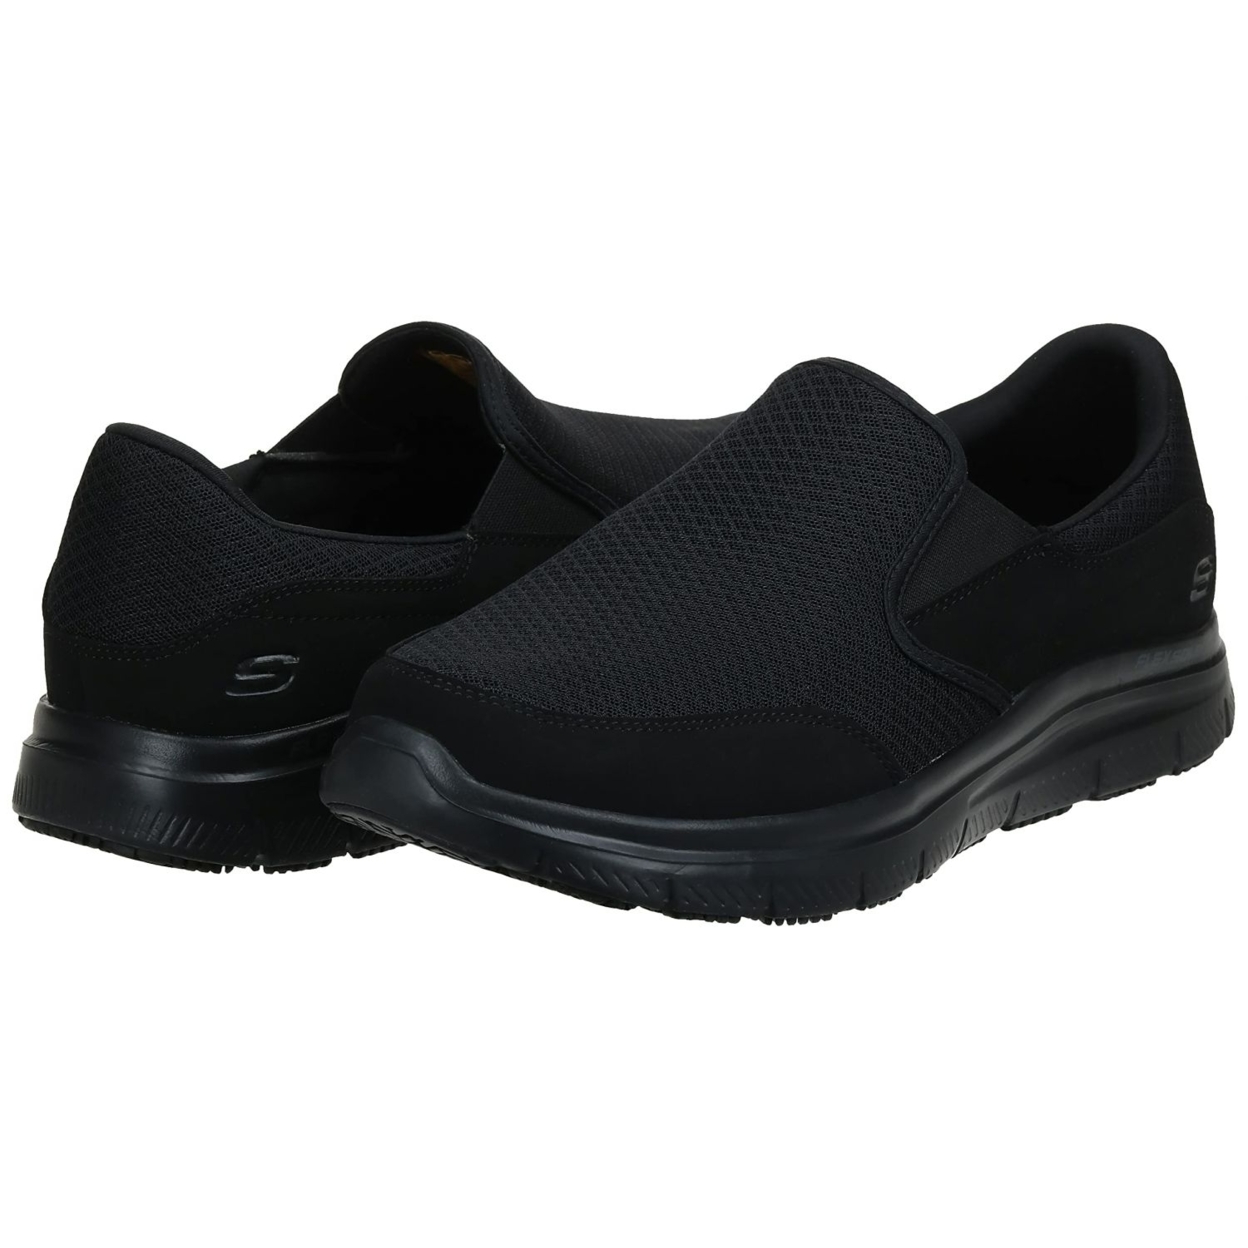 Skechers For Work Men's Flex Advantage Mcallen Food Service Shoe ONE SIZE BLACK - BLACK, 8.5 Wide